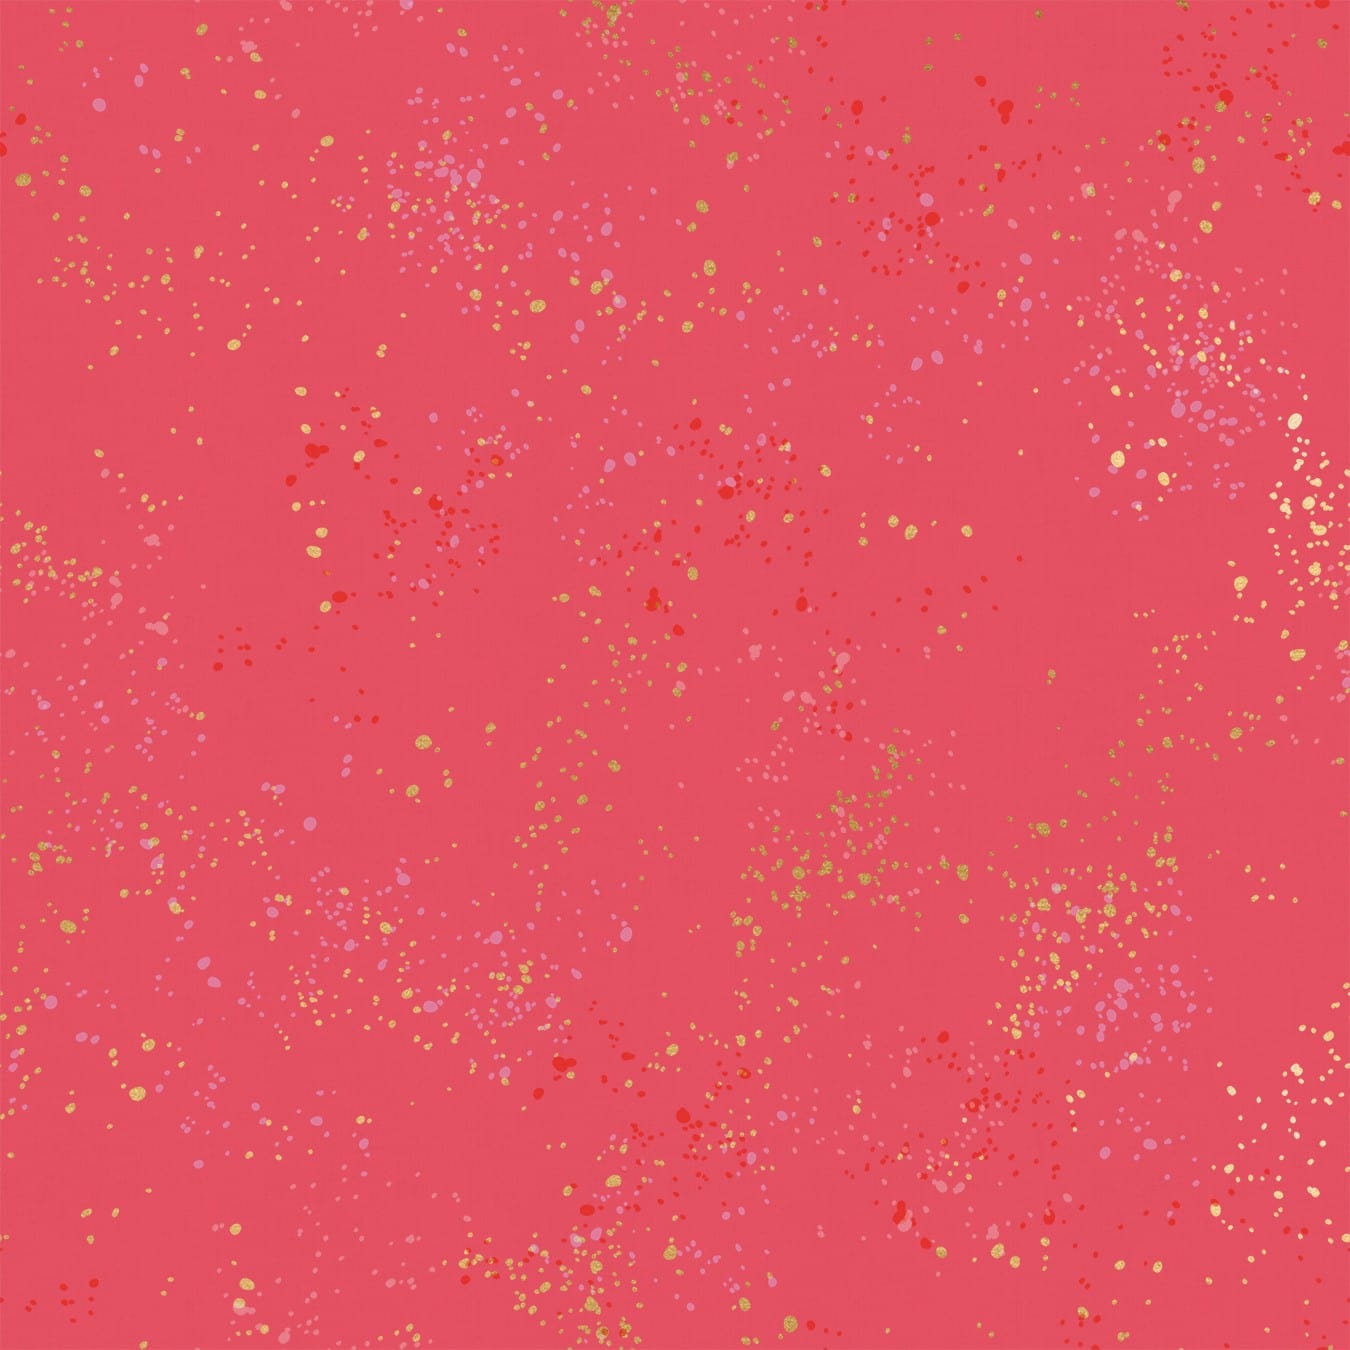 Ruby Star Speckled Metallic Strawberry